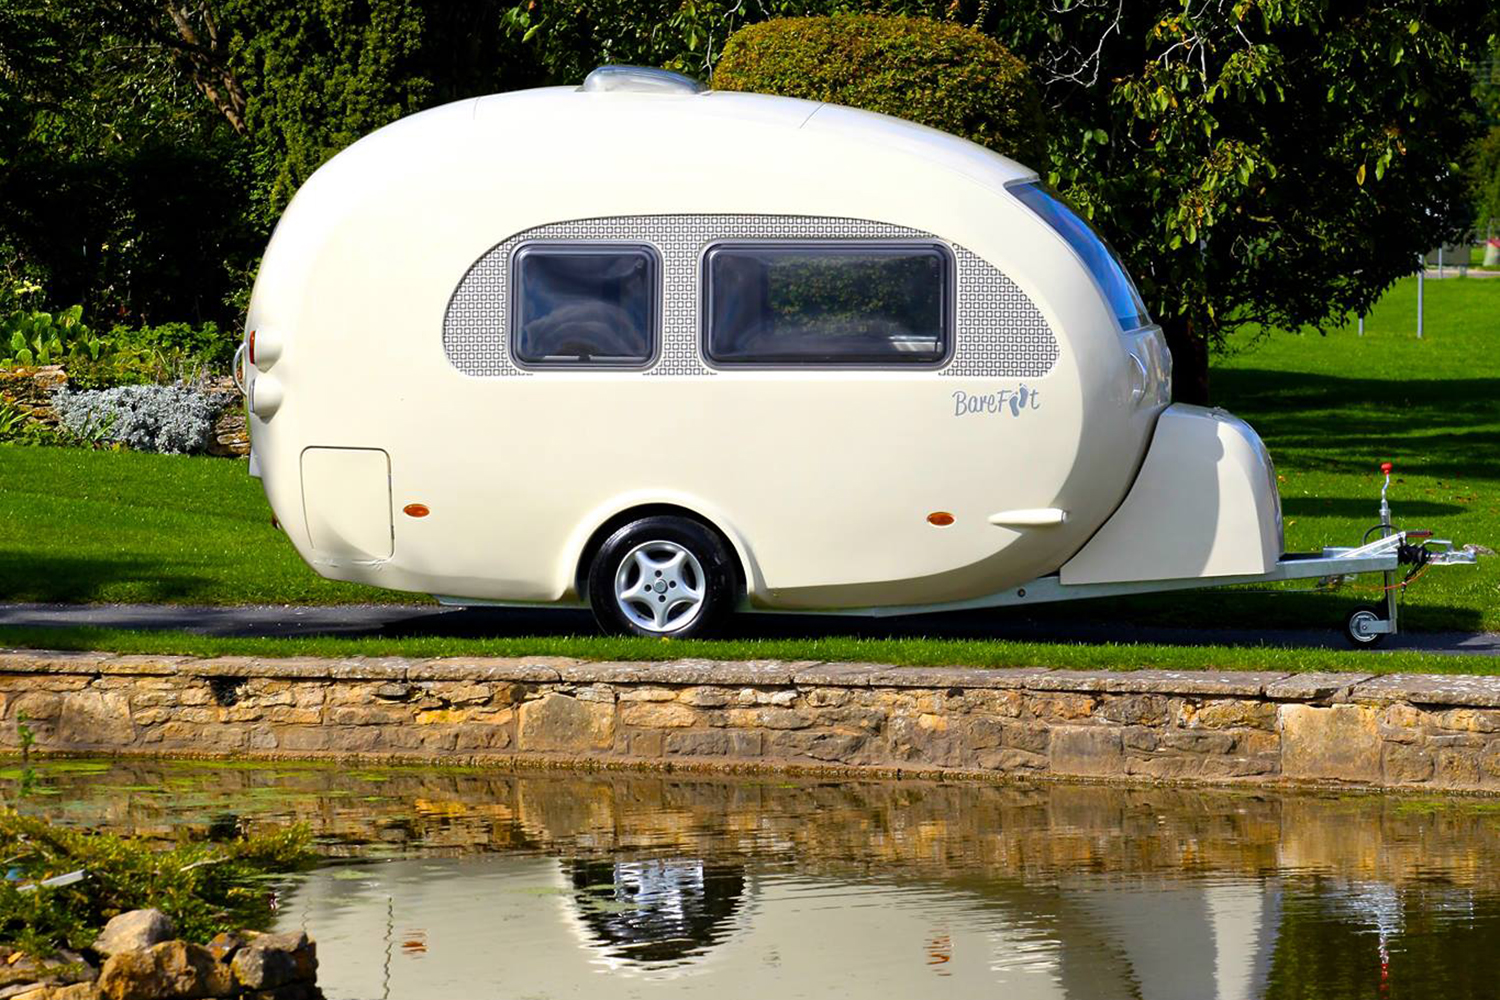 barefoot caravan makes cool curved campers 0015